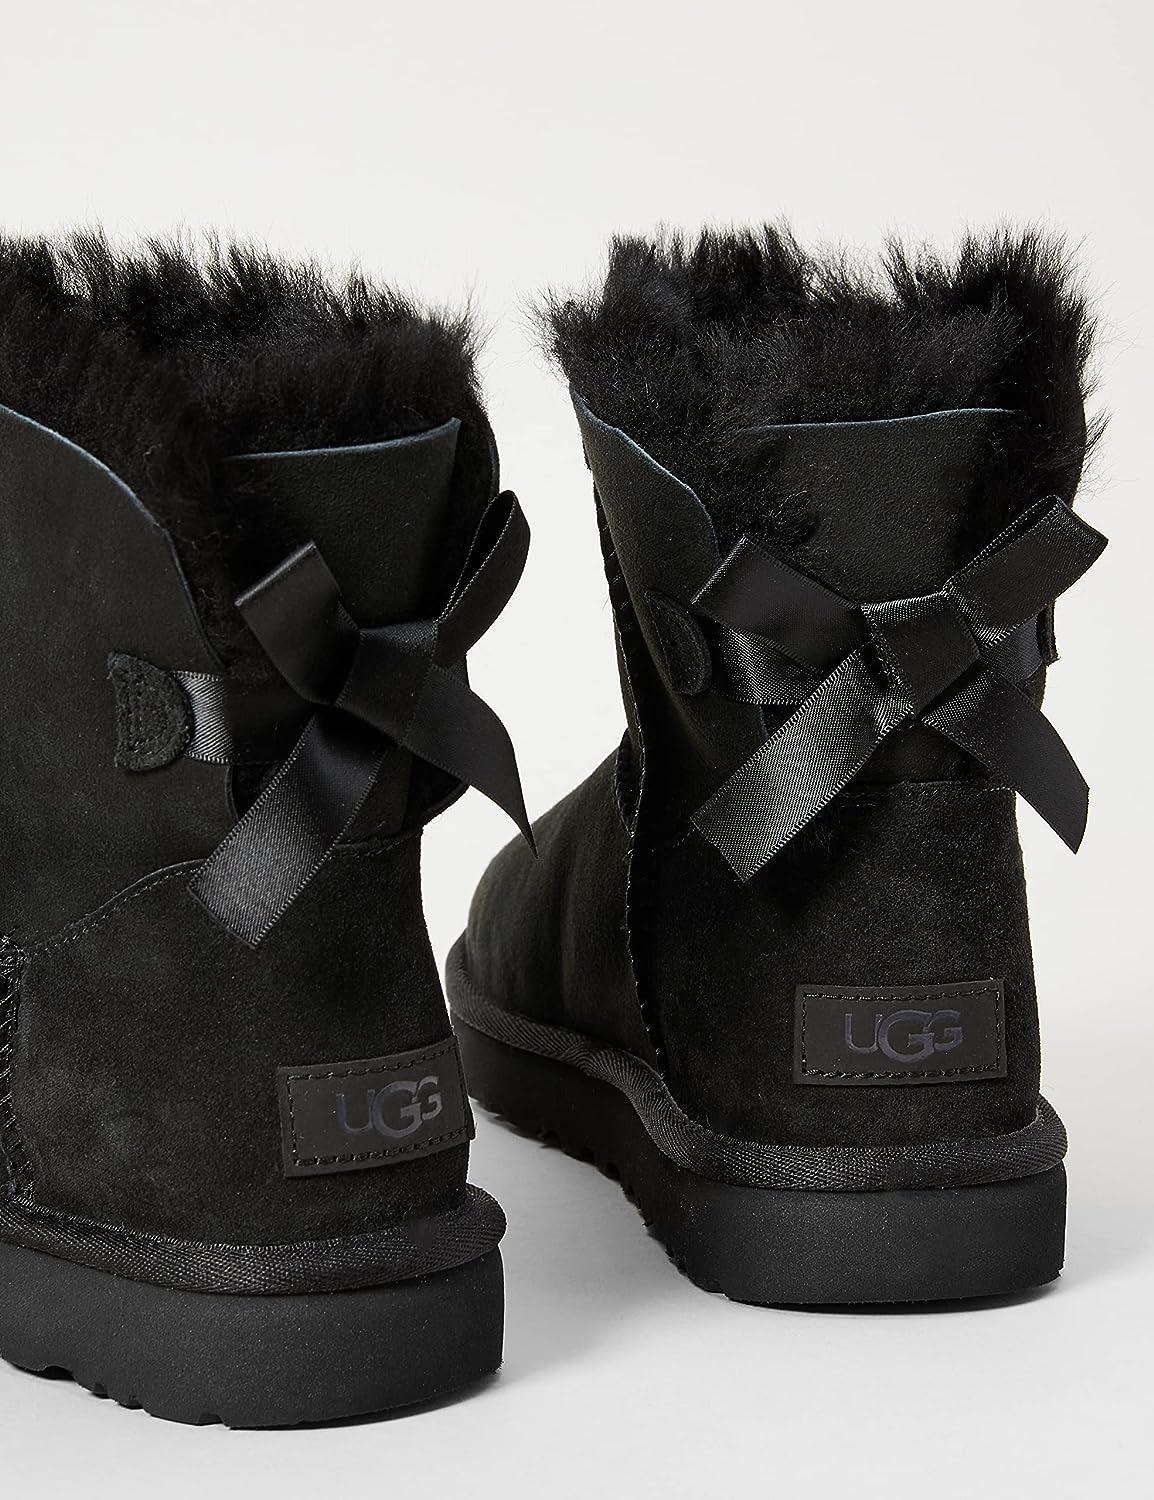 UGG Women's Mini Bailey Bow II Winter Boot, Black, 5 US/5 B US